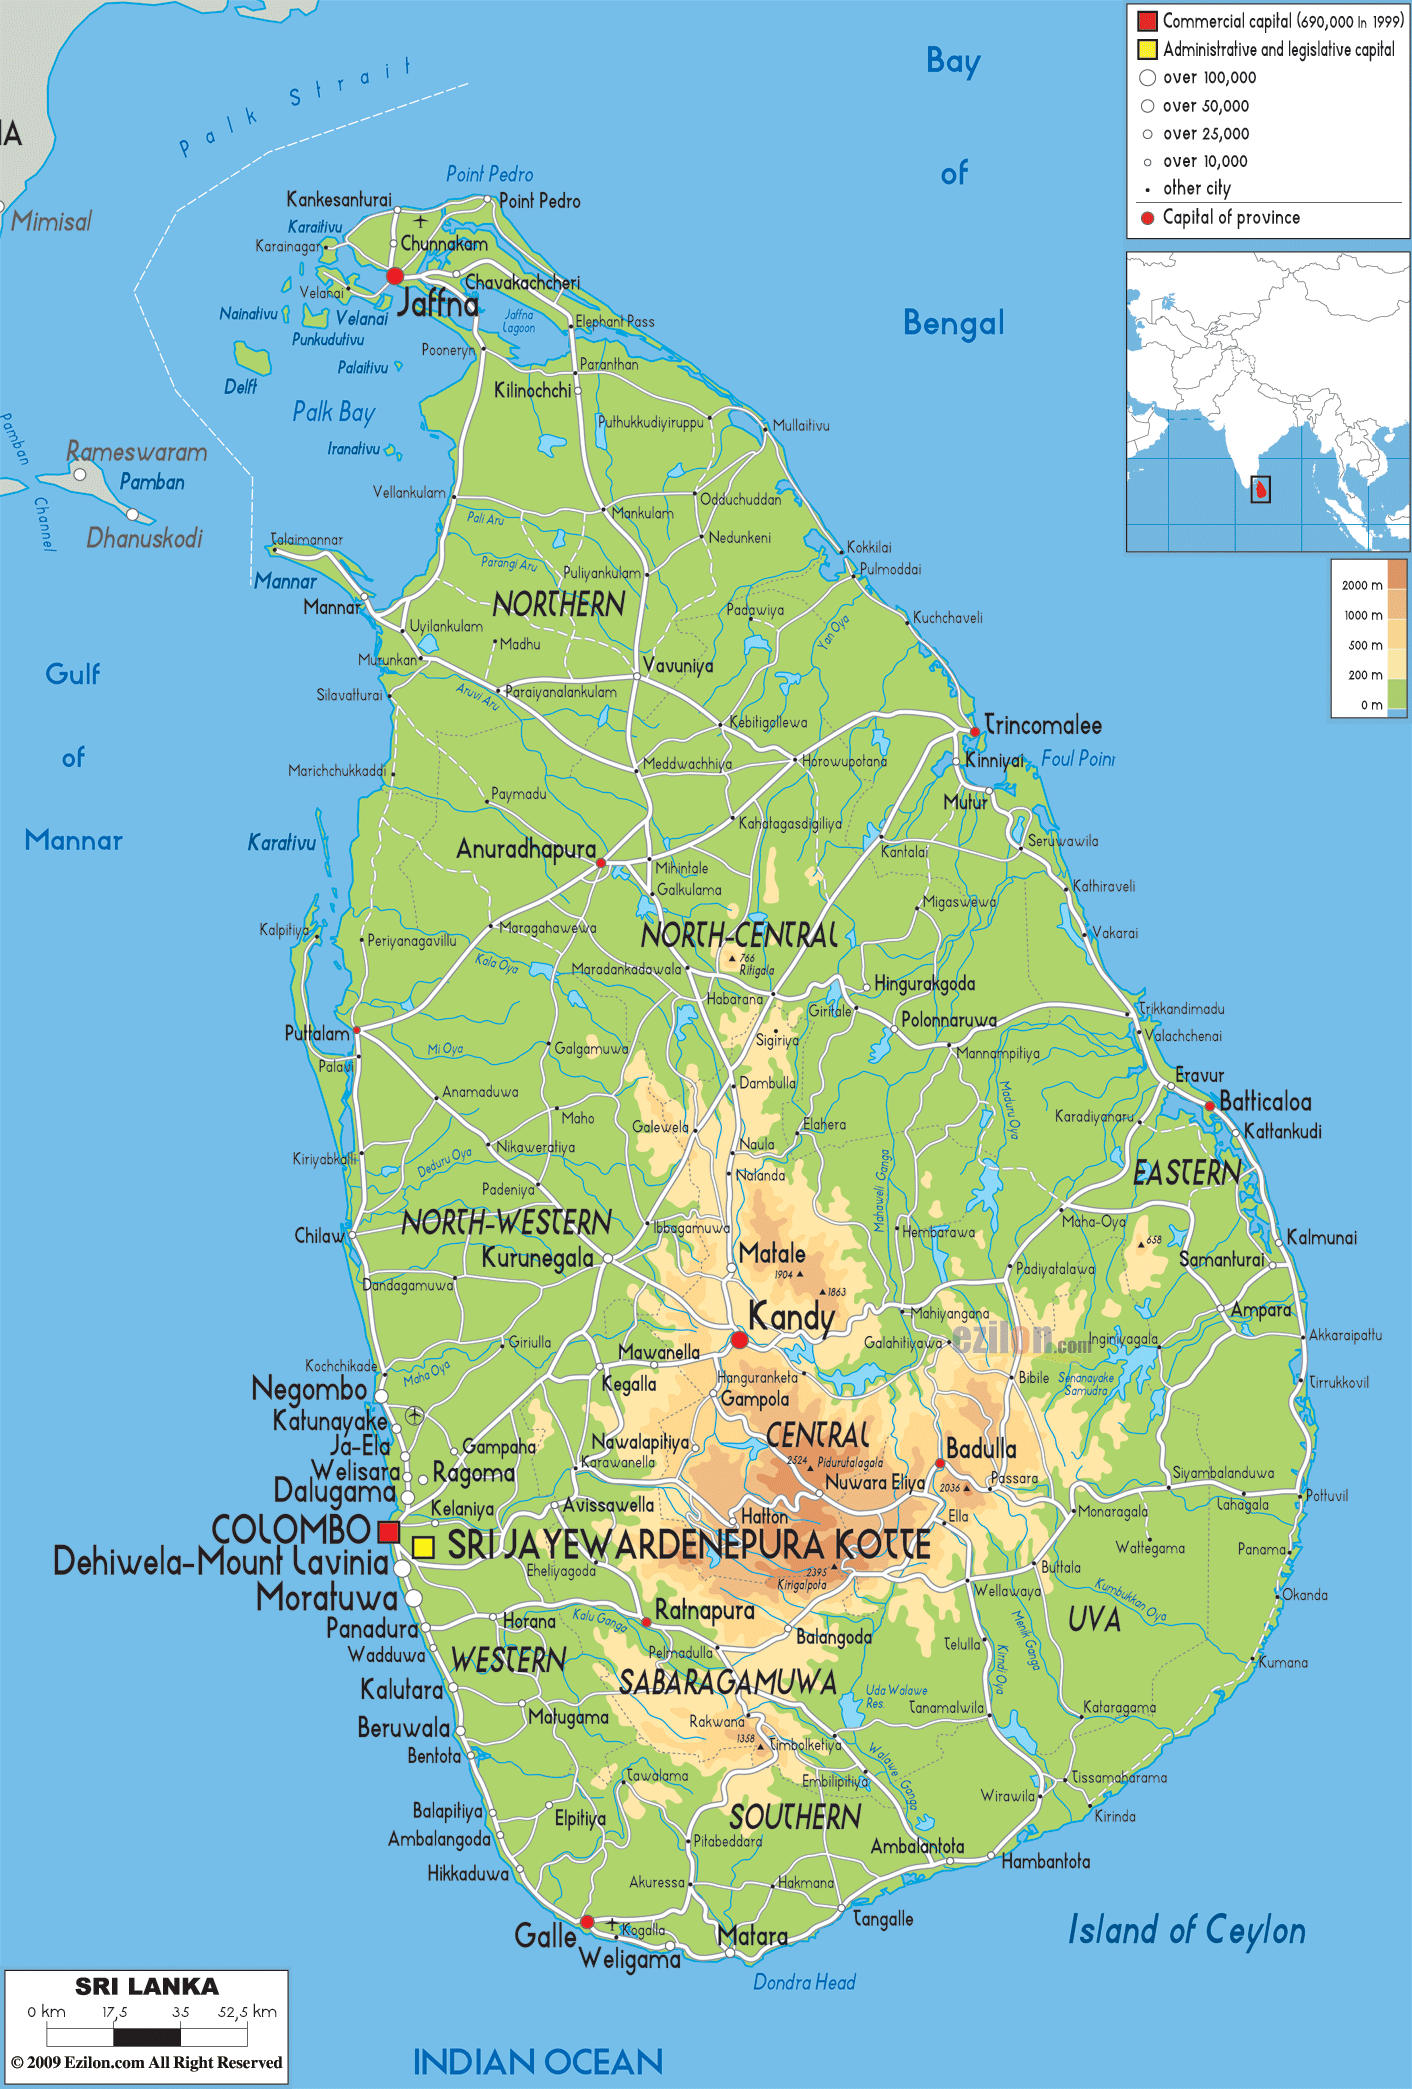 + Sri lanka geography facts